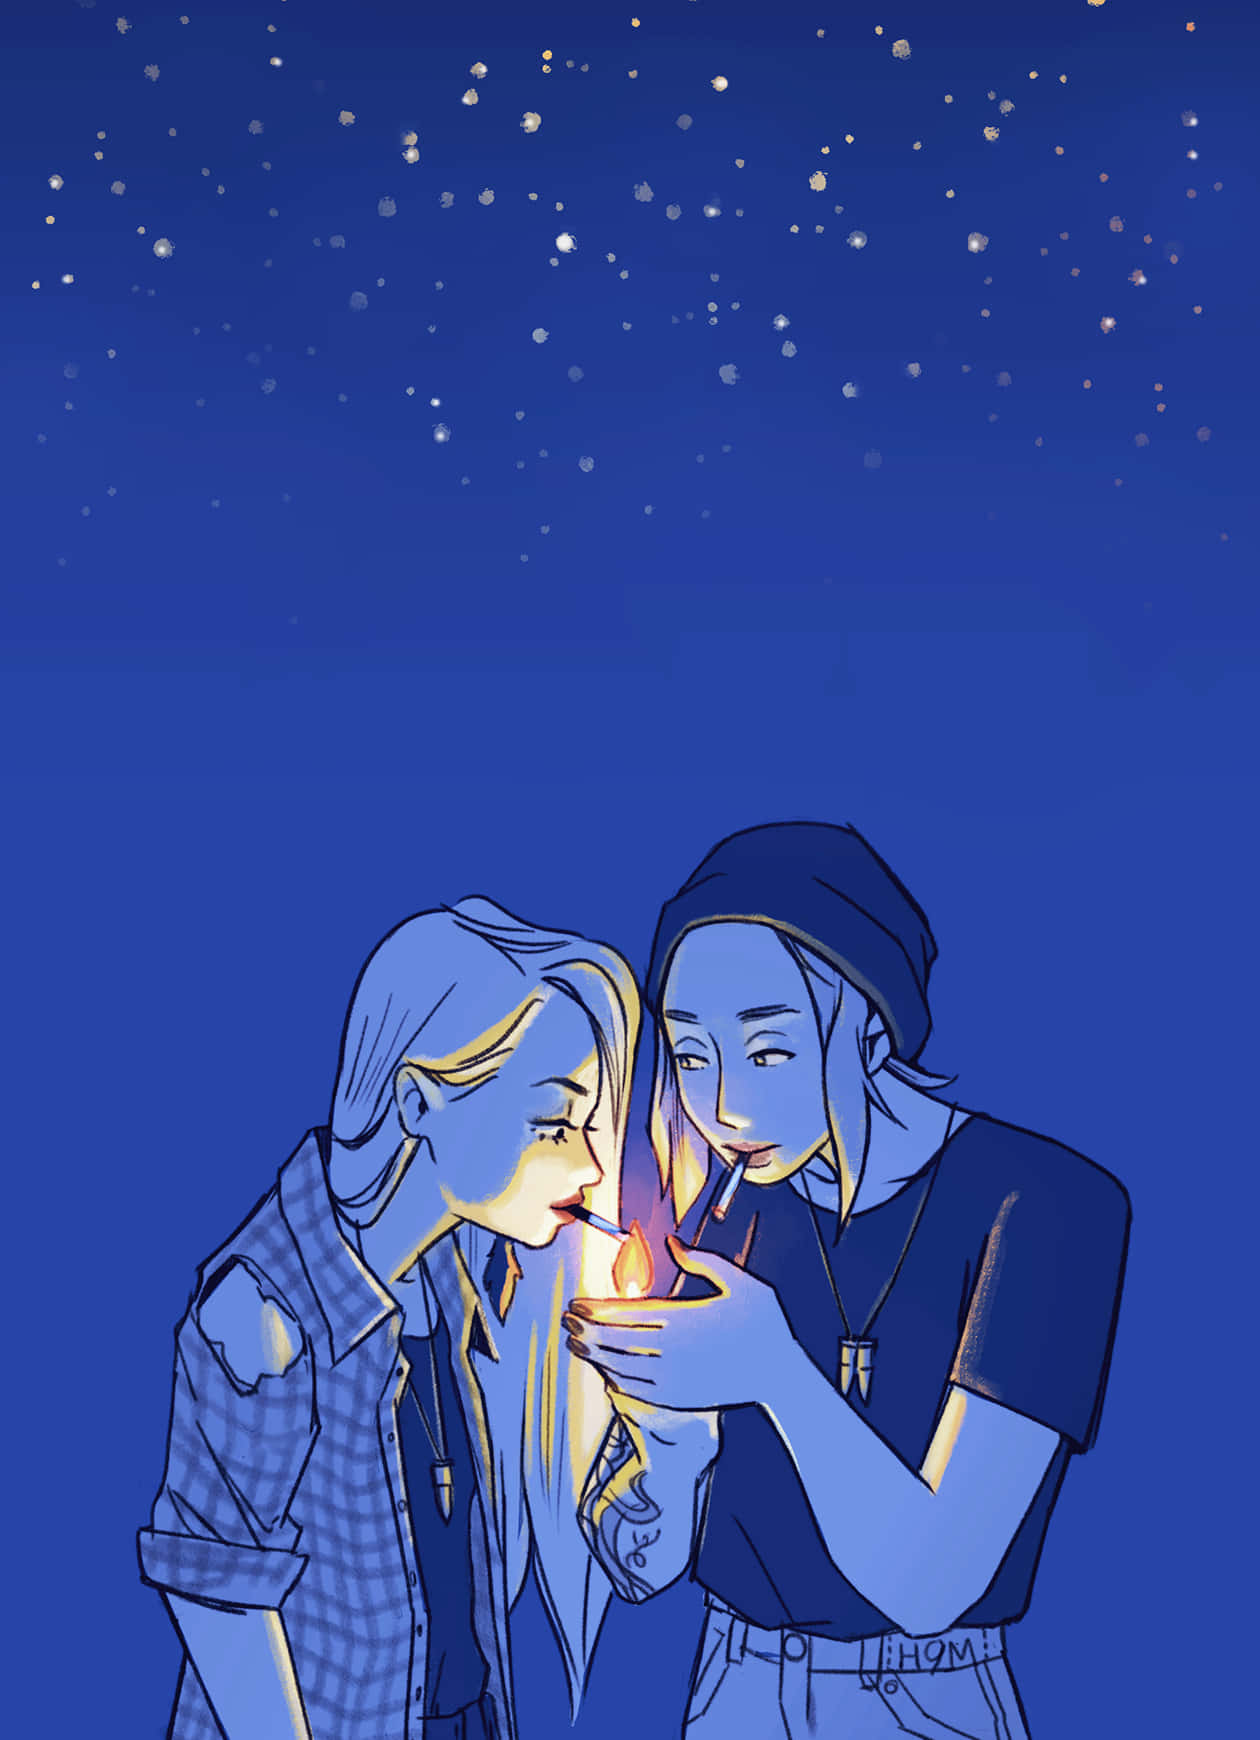 Lesbisk anime par der ryger stjernehimmel tapet. Wallpaper